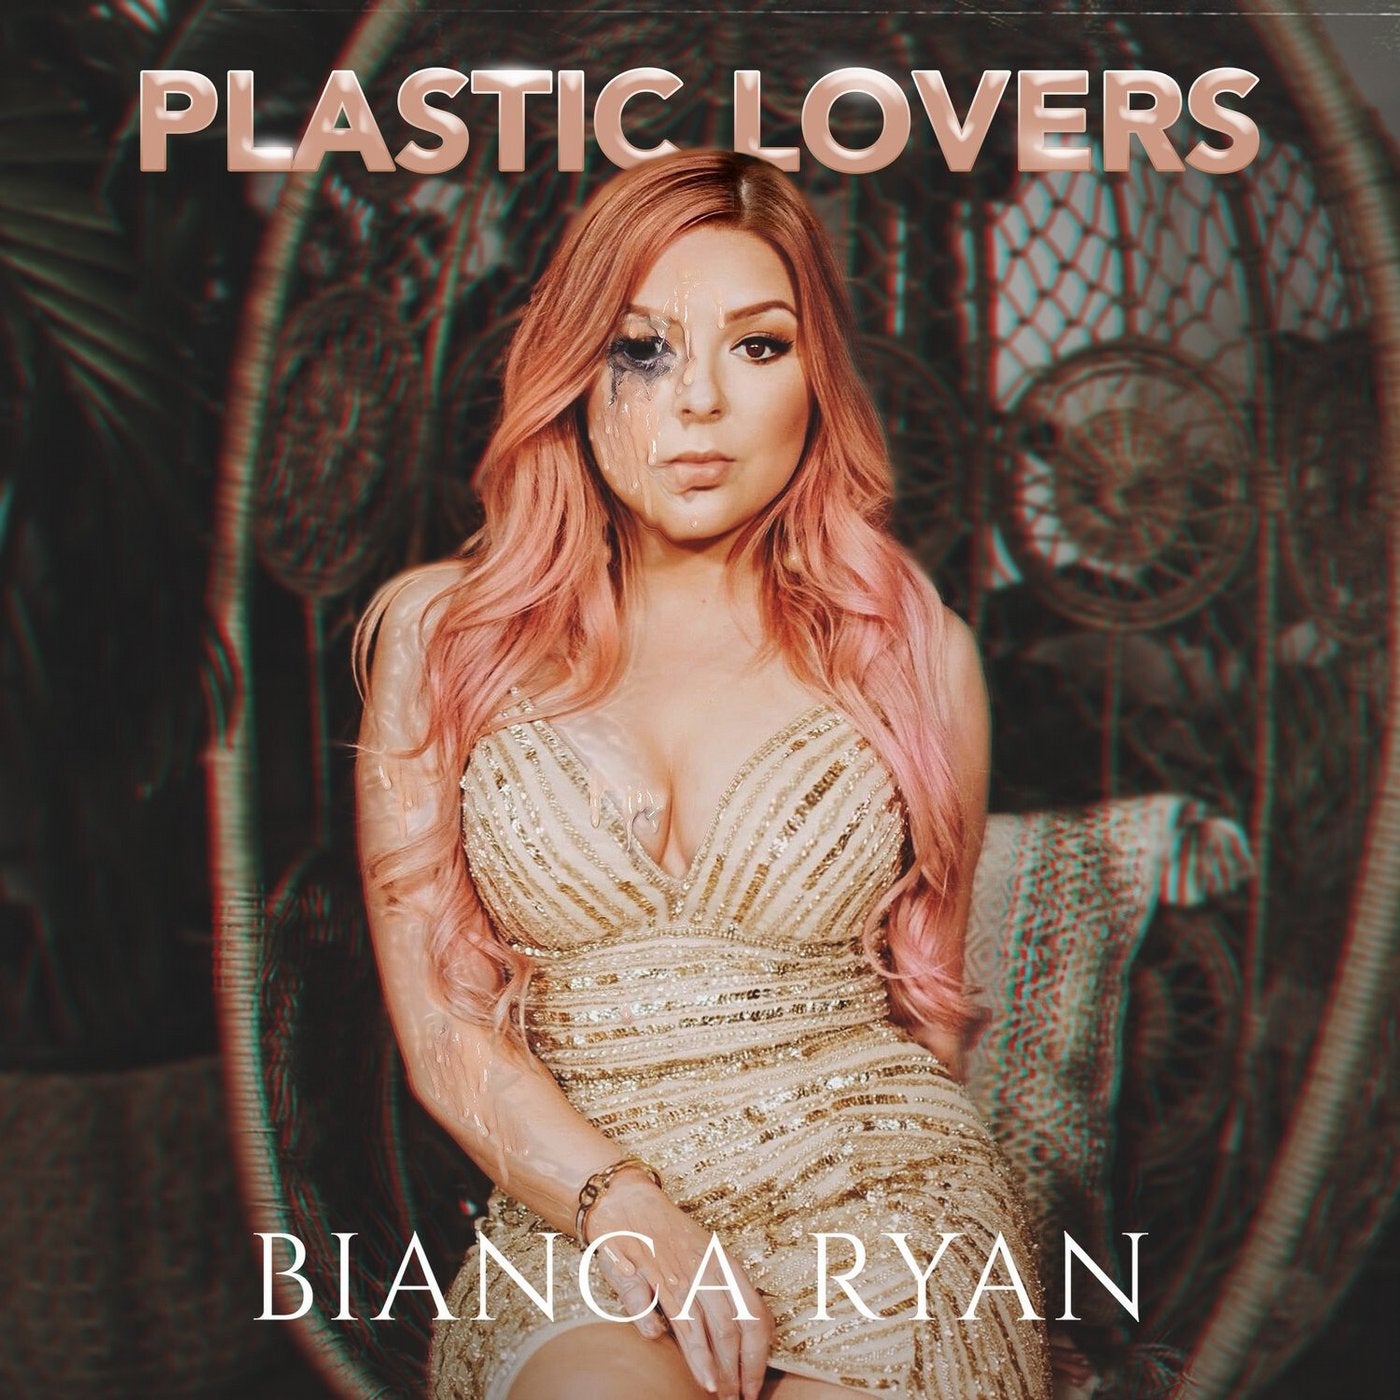 Plastic lovers